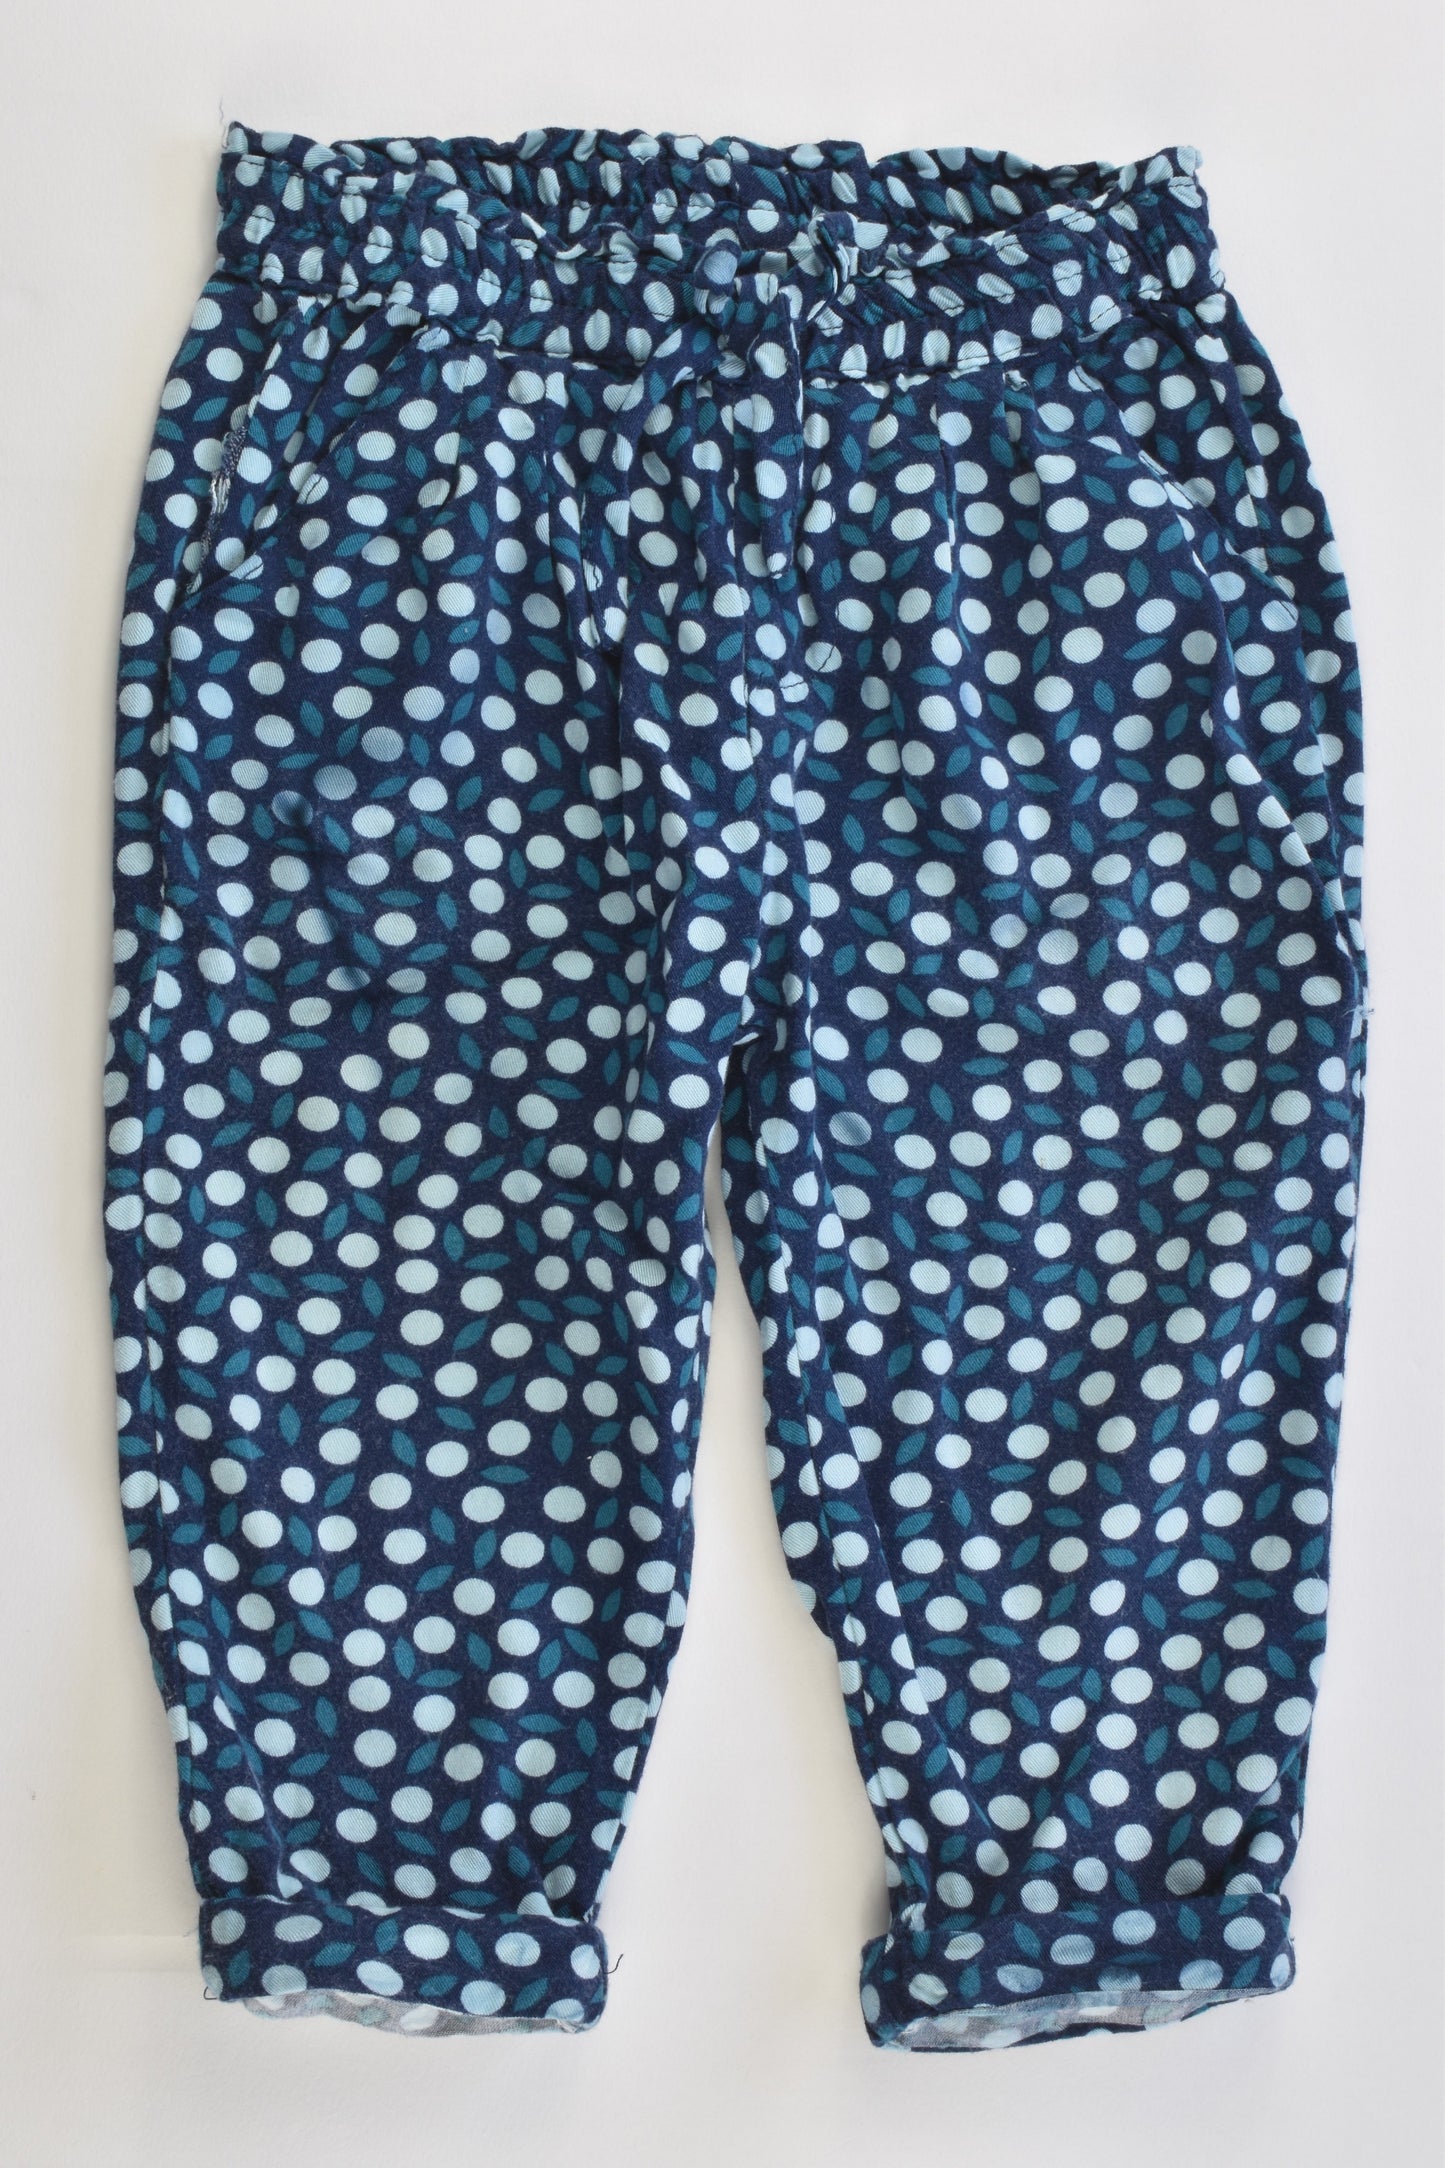 Target Size 0 (6-12 months) Polka Dots Lightweight Pants